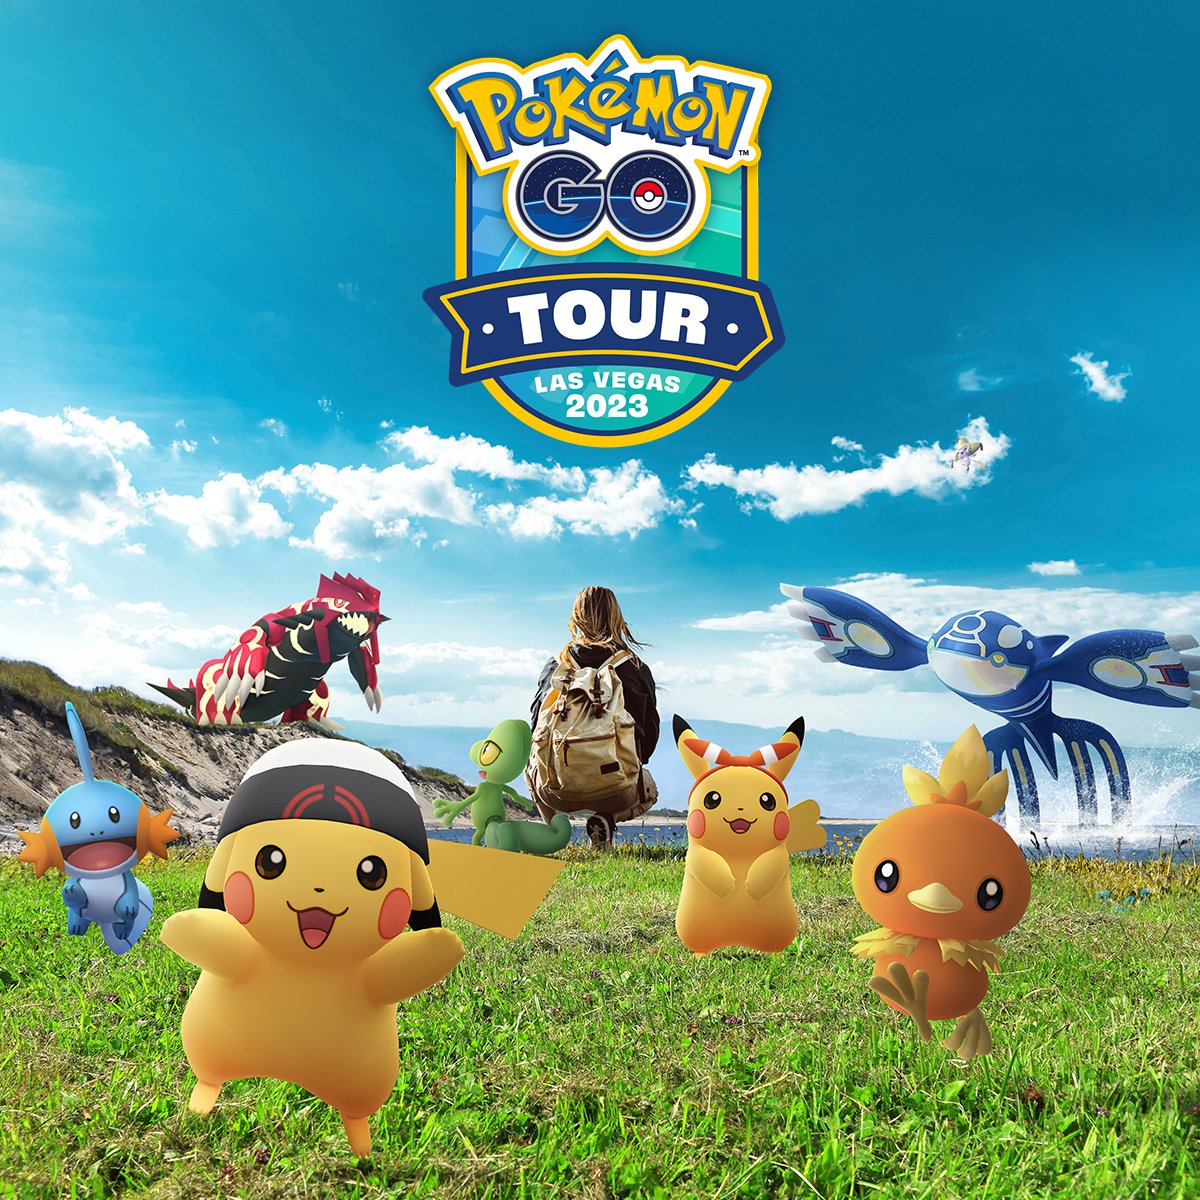 El Tour de Pokémon GO: Hoenn (Las Vegas) 2022 